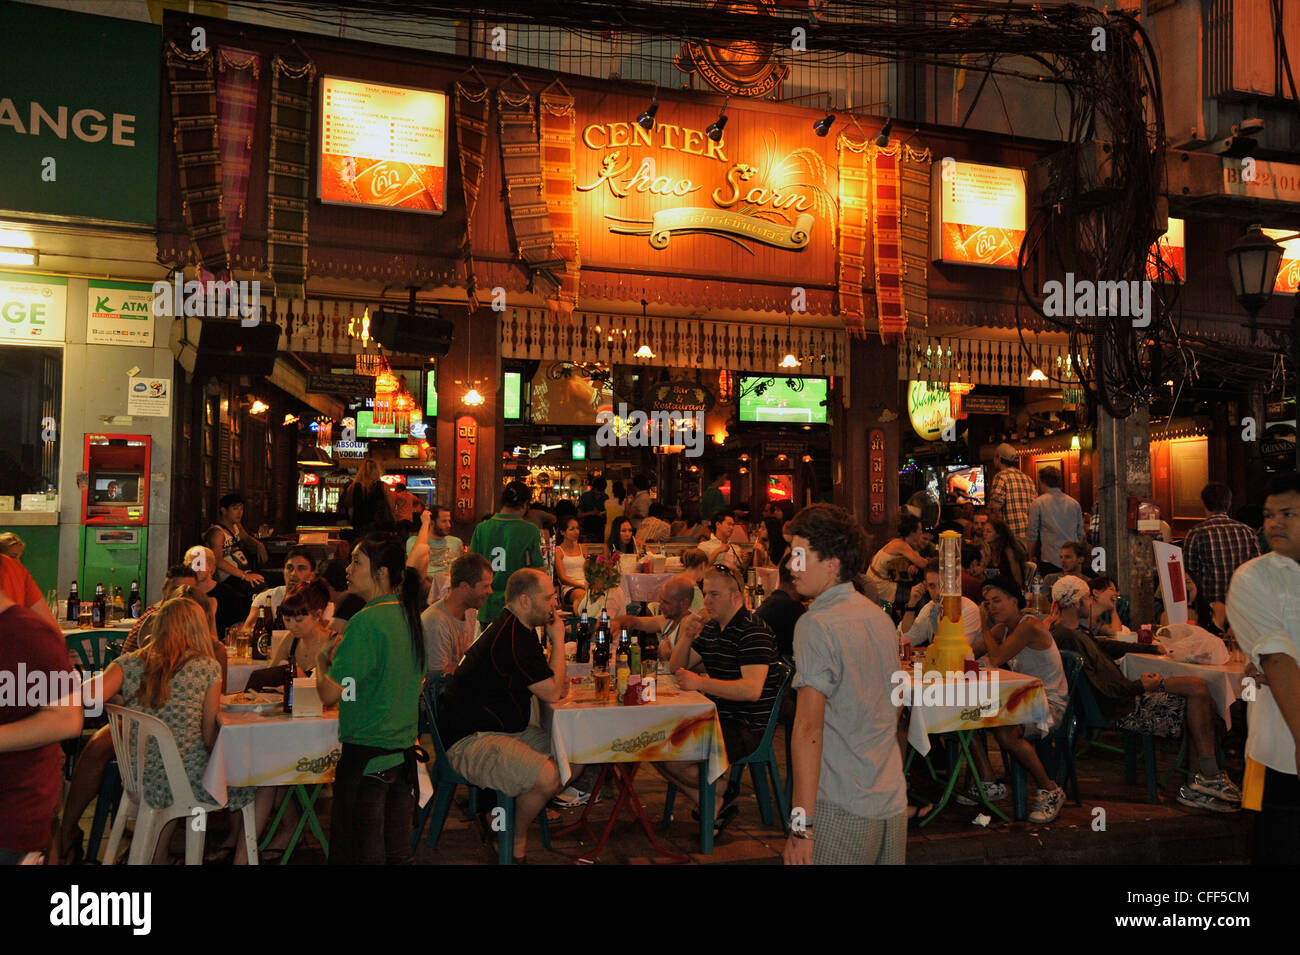 Tourist in front of restaurant, sitting at tables, Khao San Road, Banglampoo, Bangkok, Thailand, Asia Stock Photo